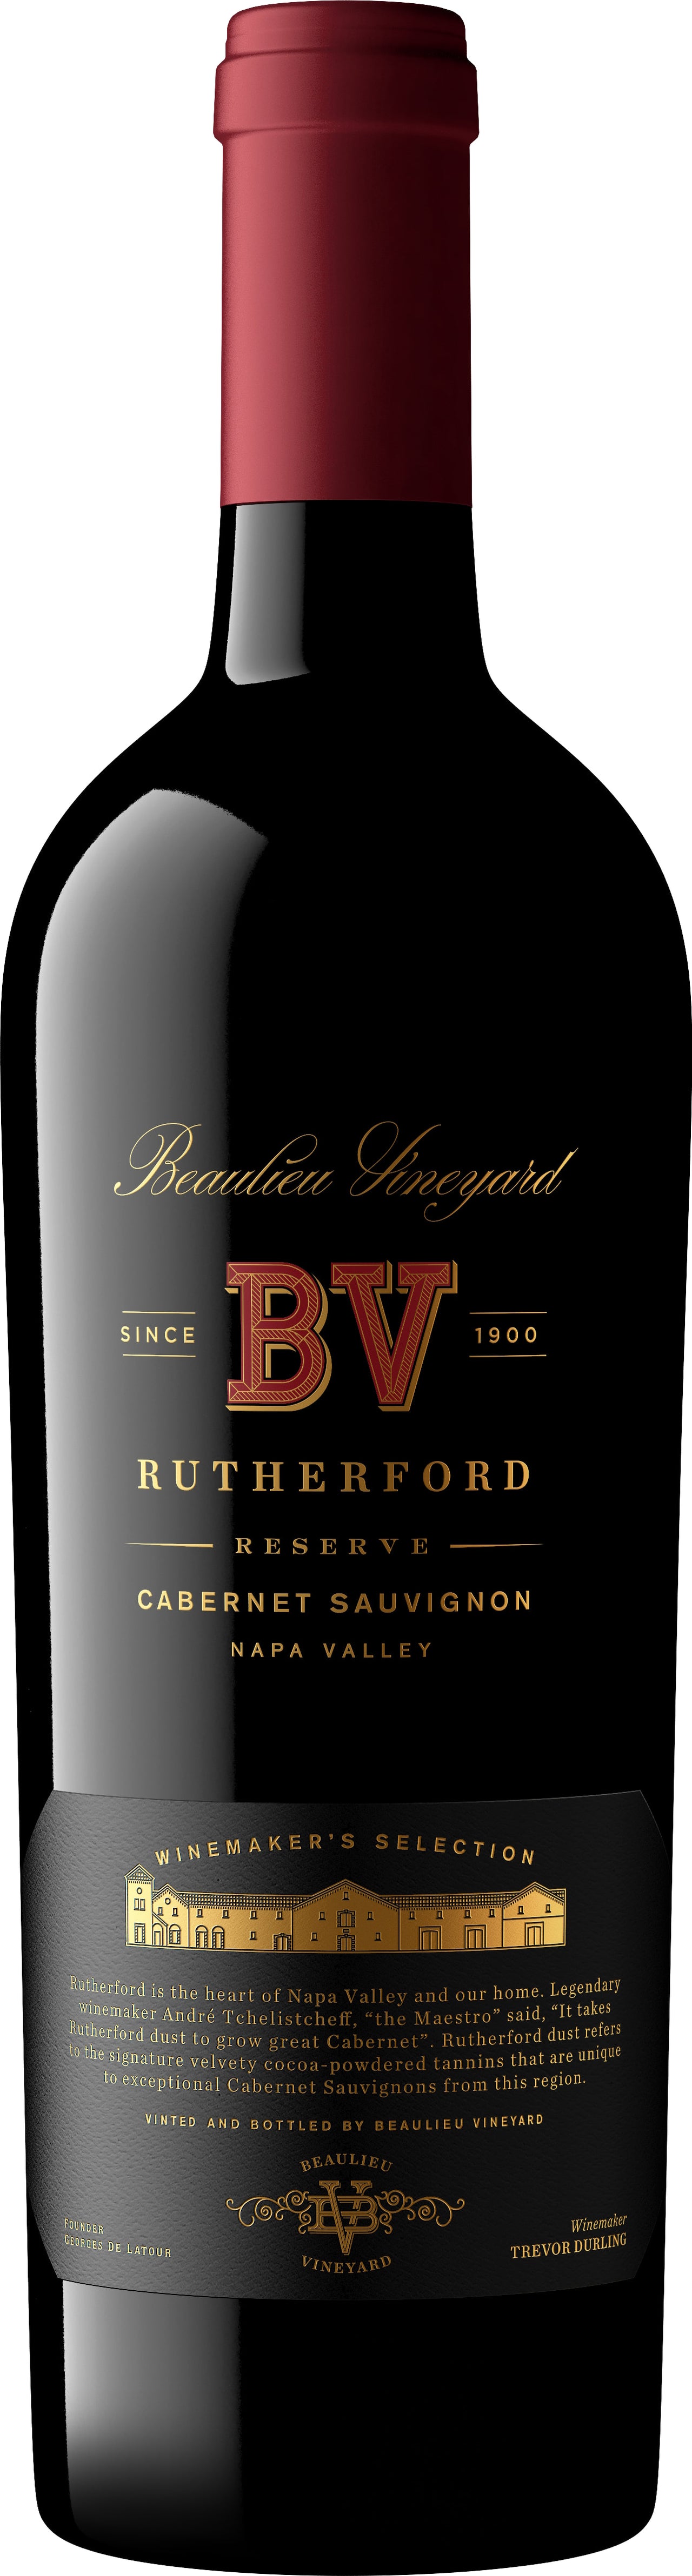 Beaulieu Vineyard Rutherford Reserve Cabernet Sauvignon 2019 75cl - Buy Beaulieu Vineyard Wines from GREAT WINES DIRECT wine shop